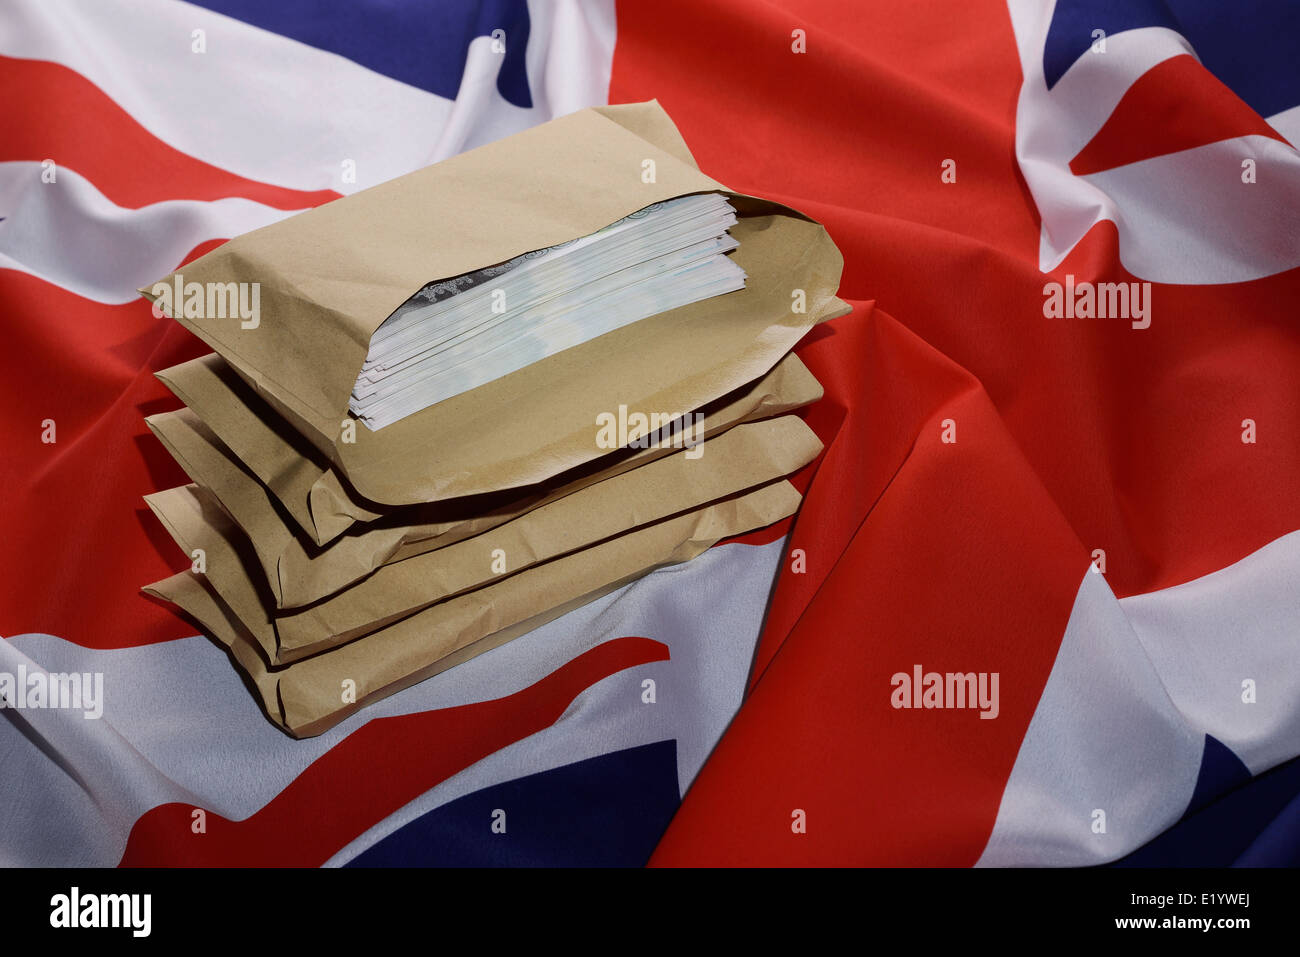 Union Jack flag with brown envelopes full of money Stock Photo